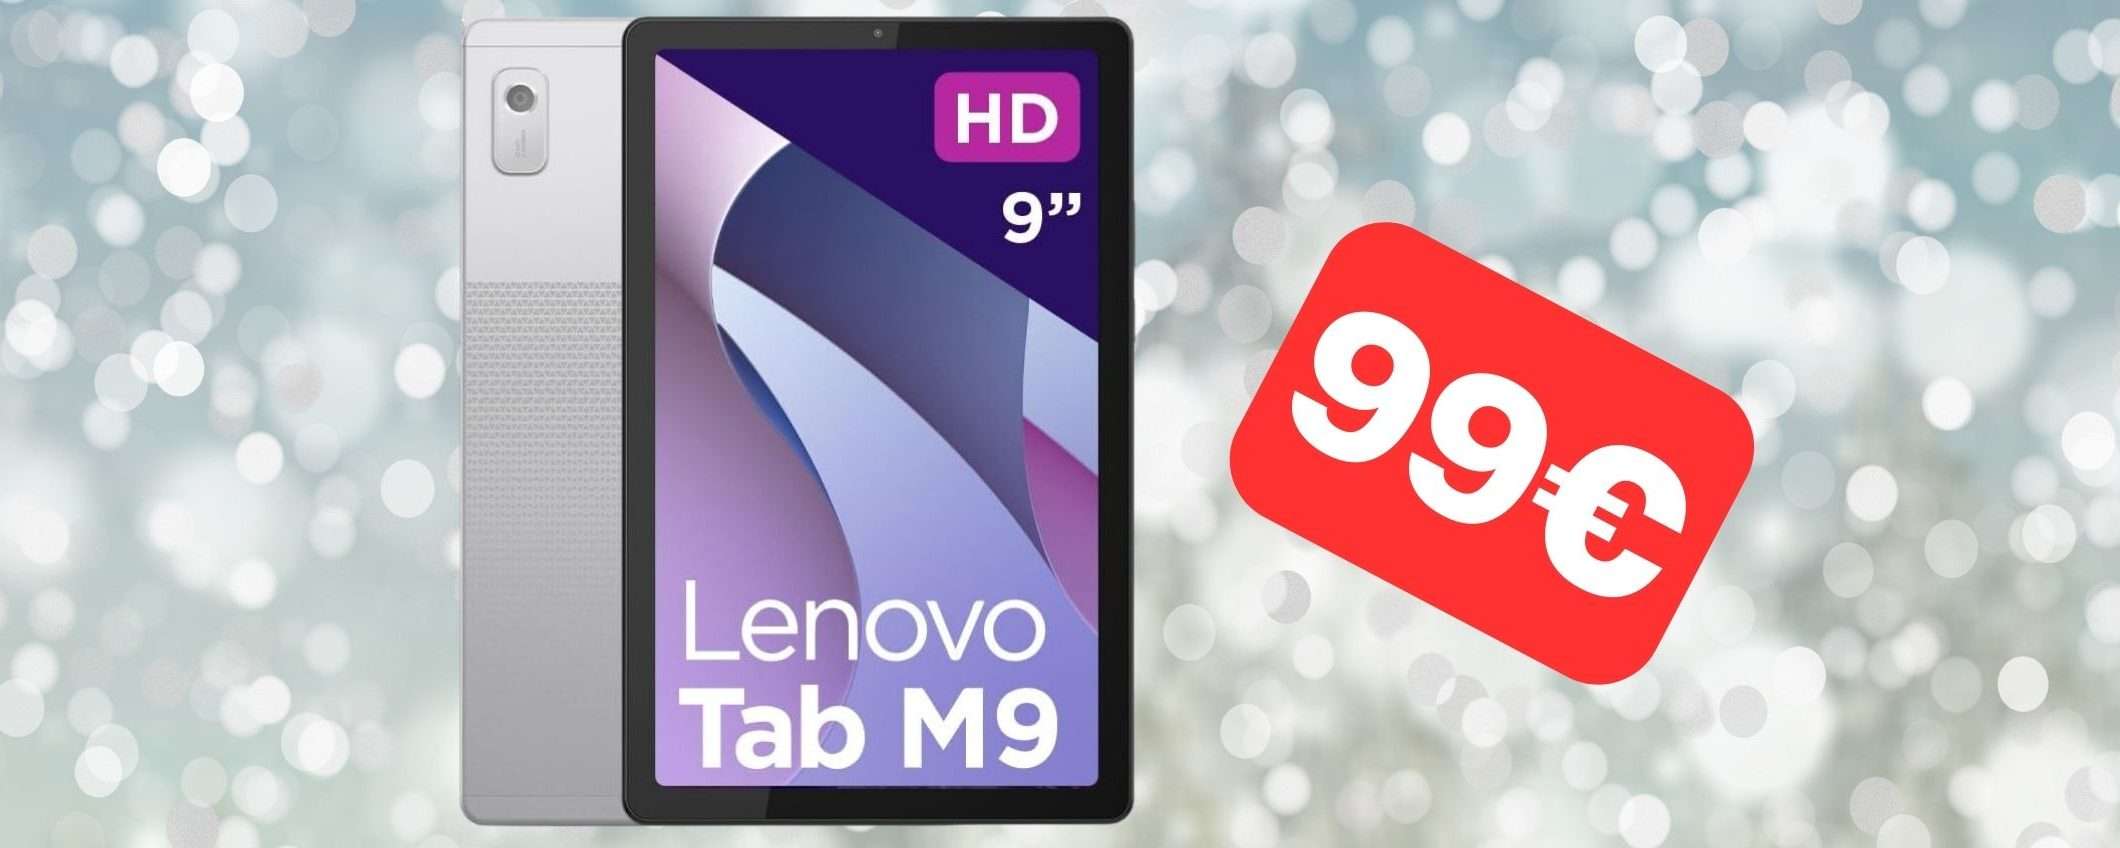 Tablet Lenovo a 99 euro: OFFERTA DI NATALE Amazon